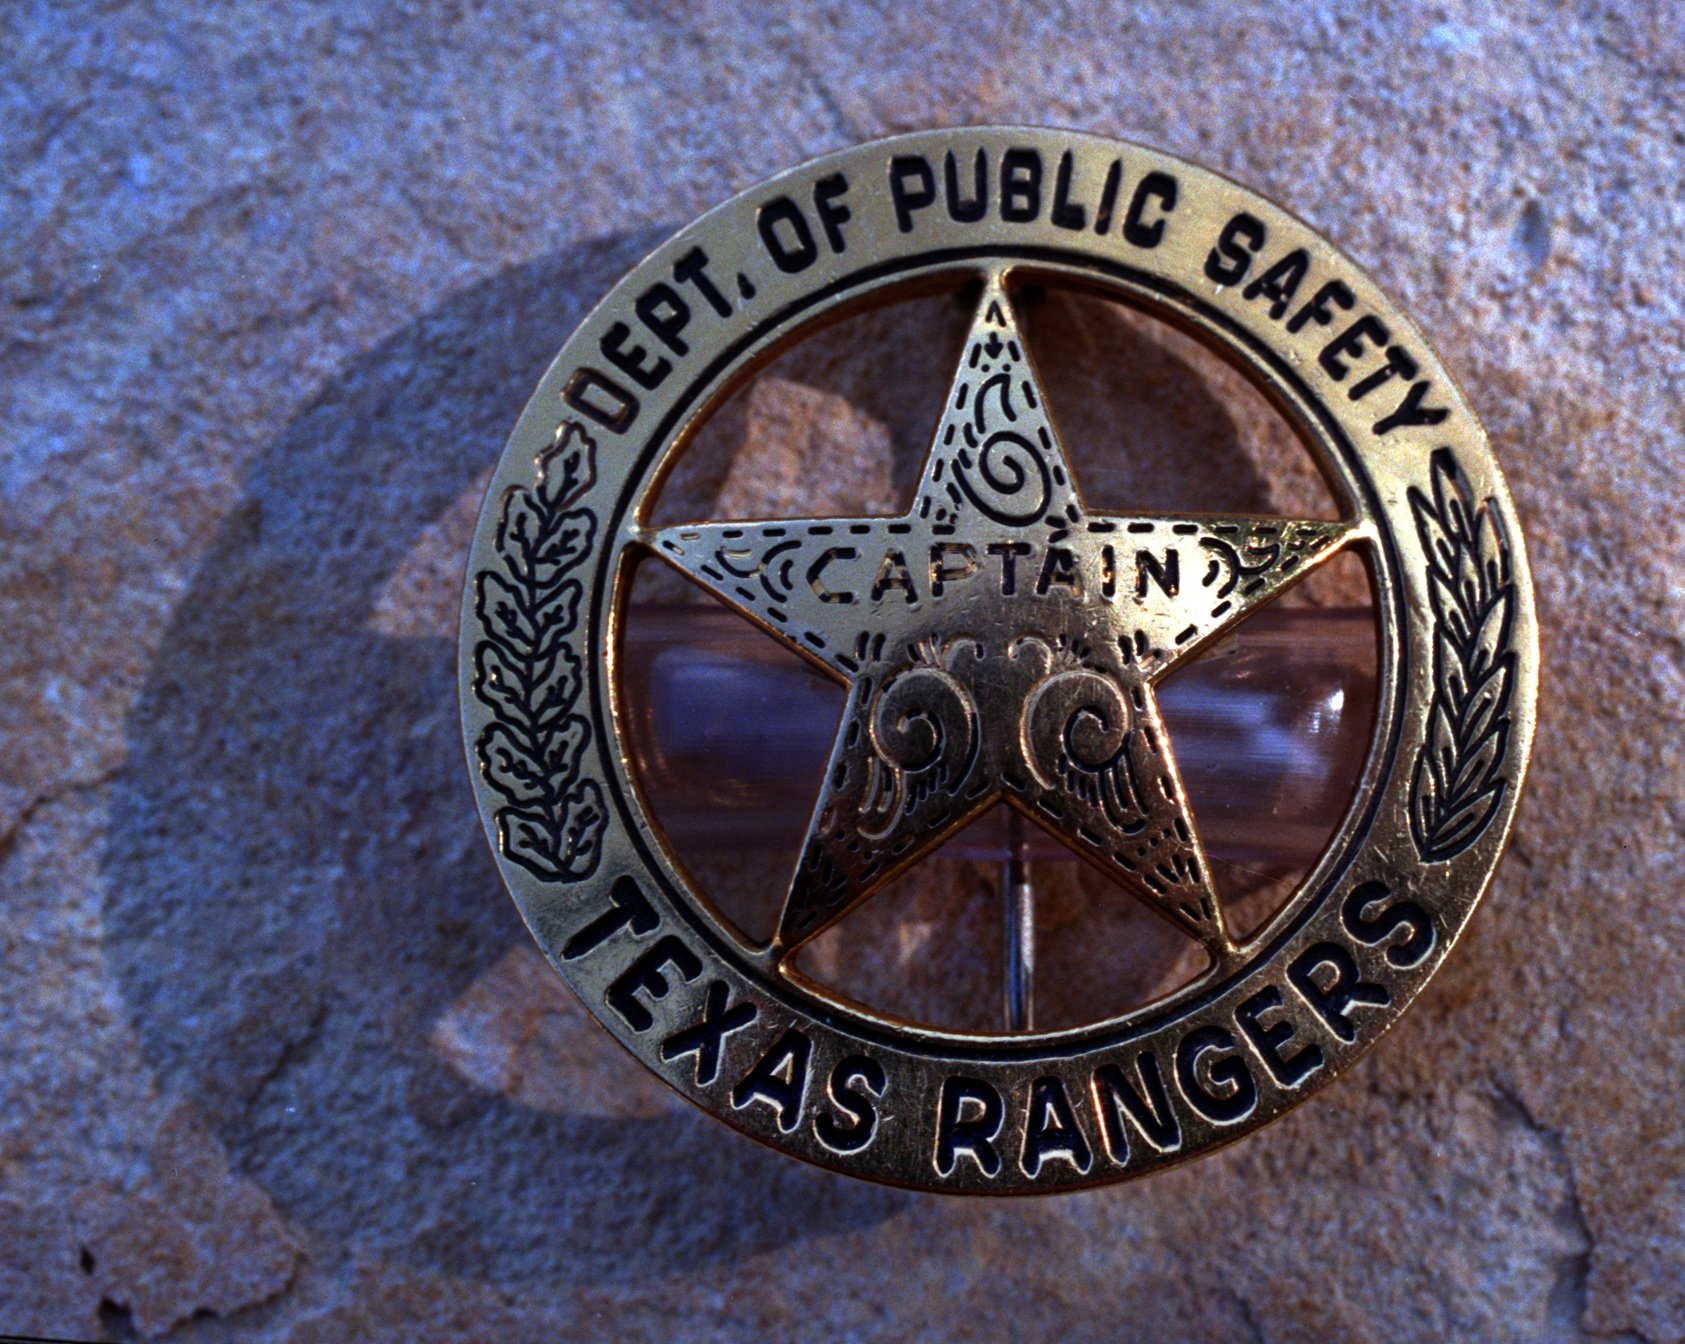 Texas Rangers turn 200 years old